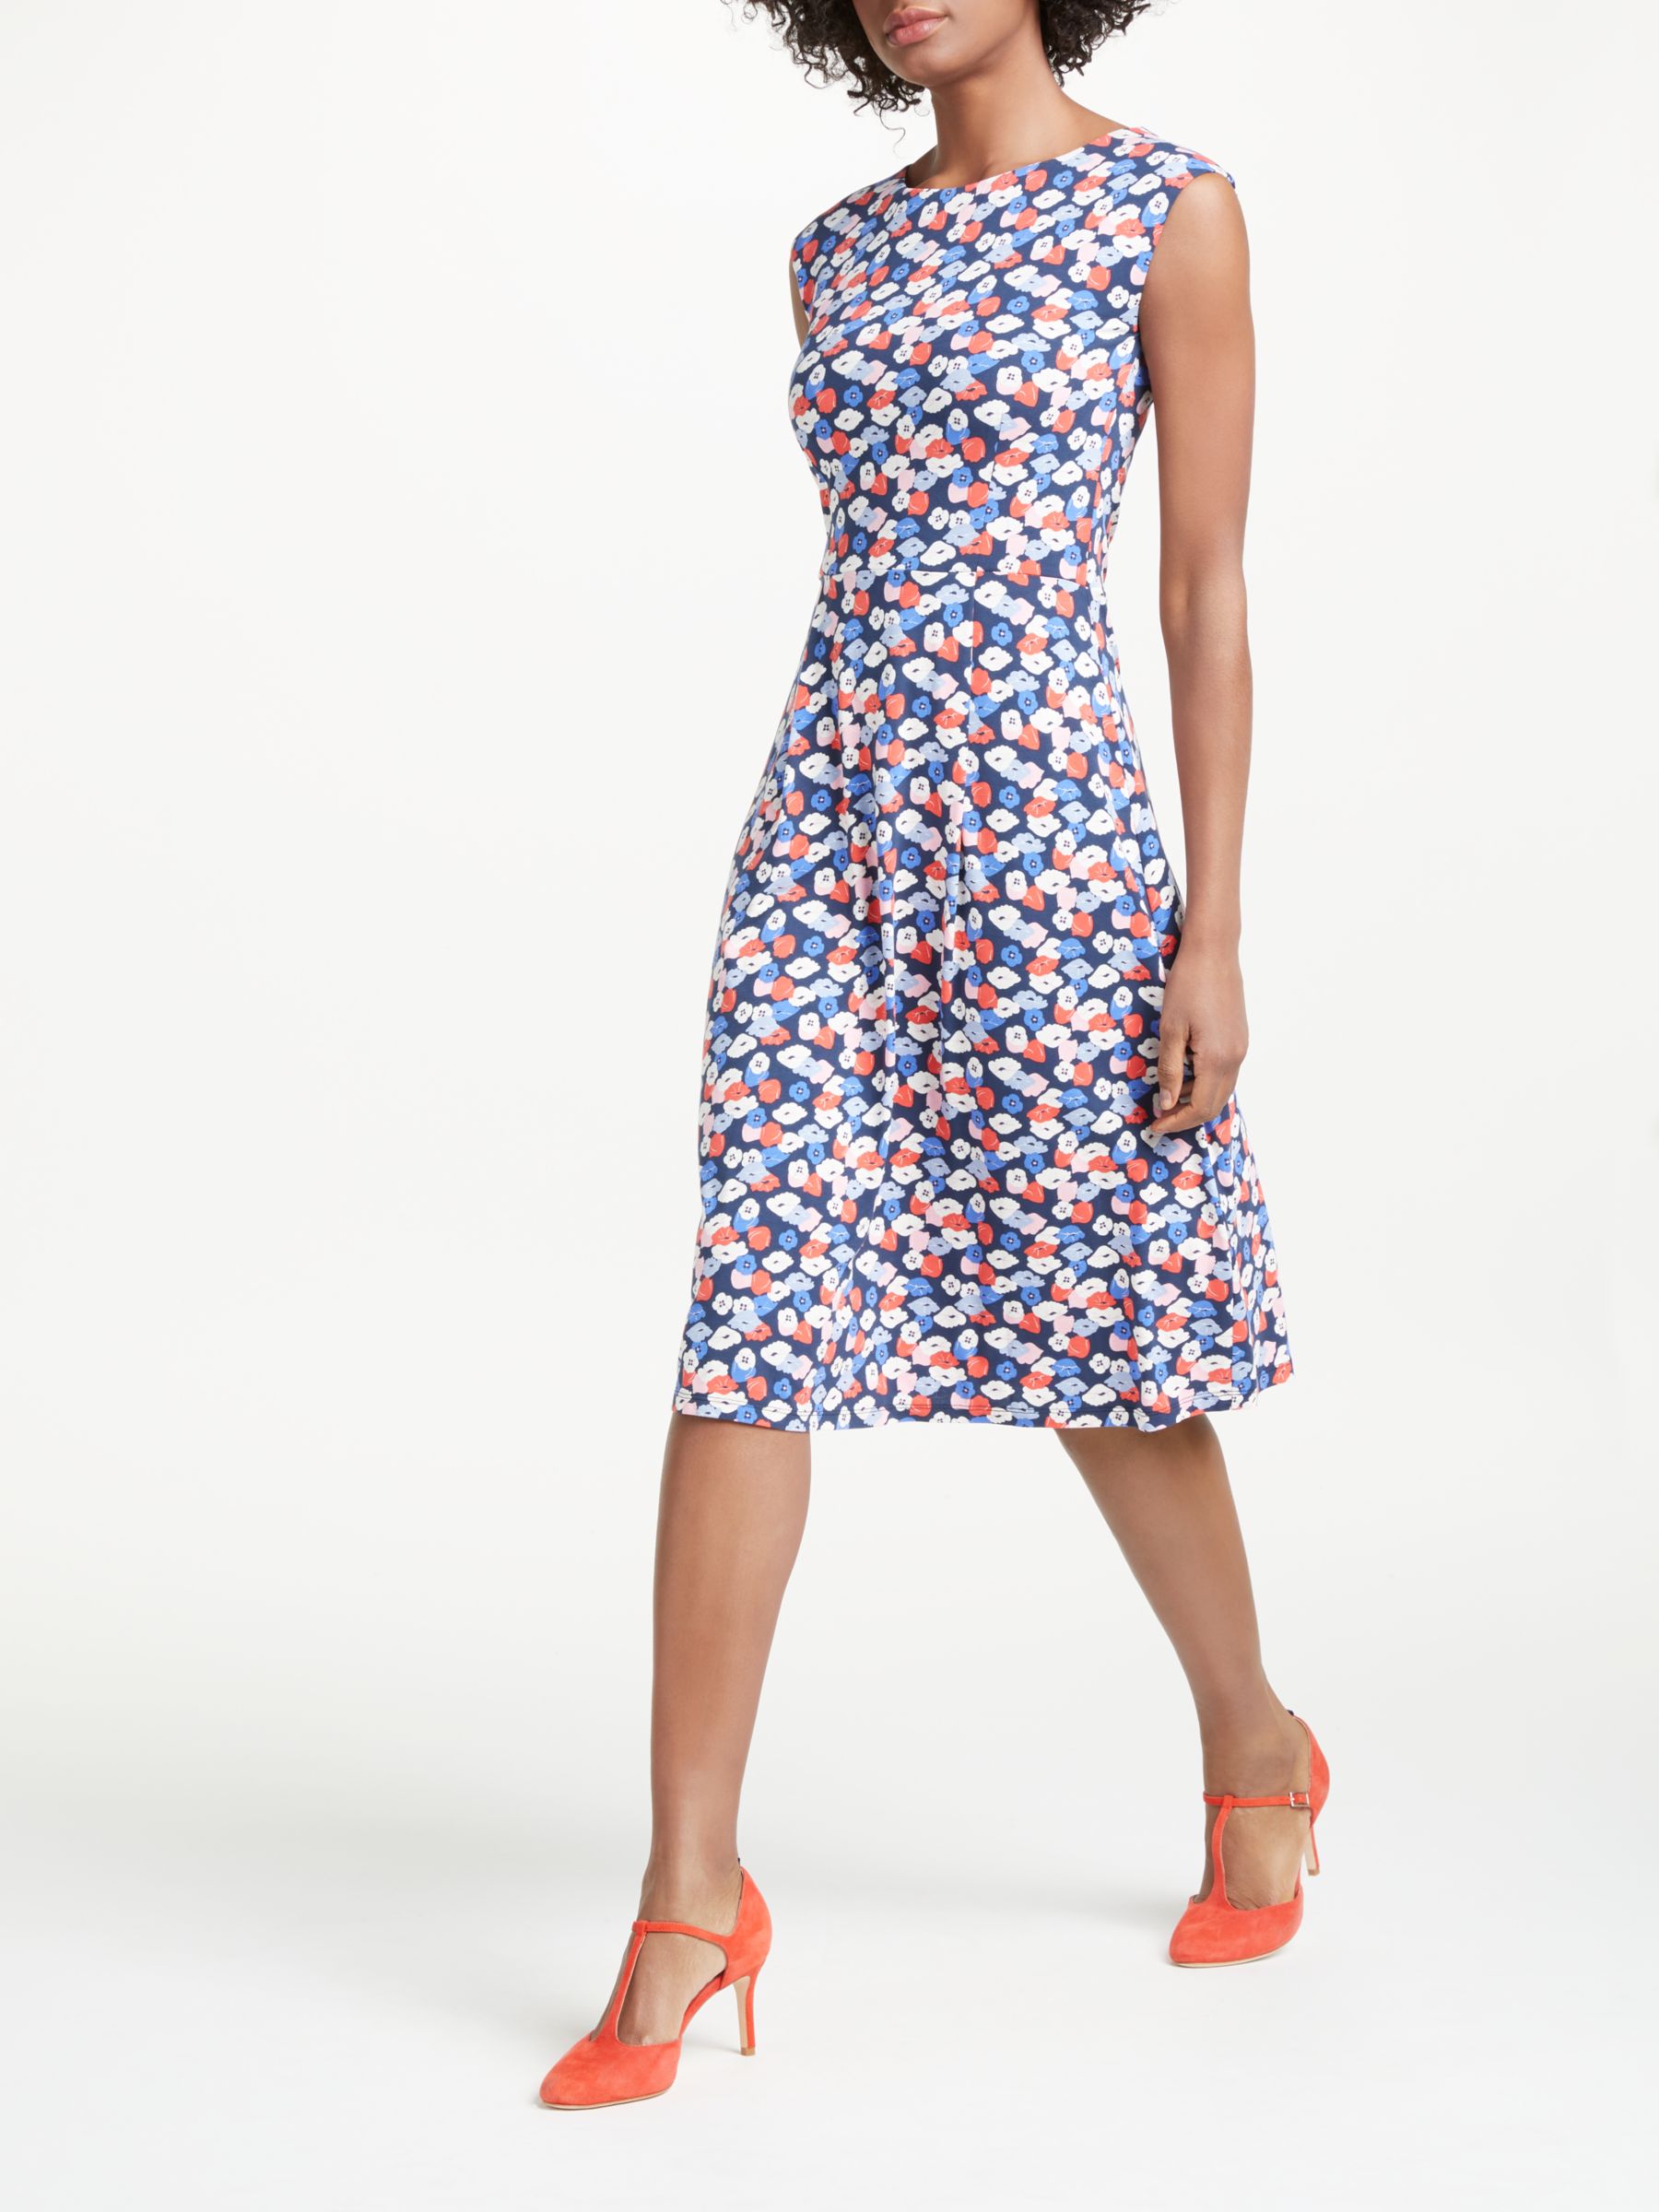 Boden Marina Poppy Print Jersey Dress, Navy/Multi at John Lewis & Partners